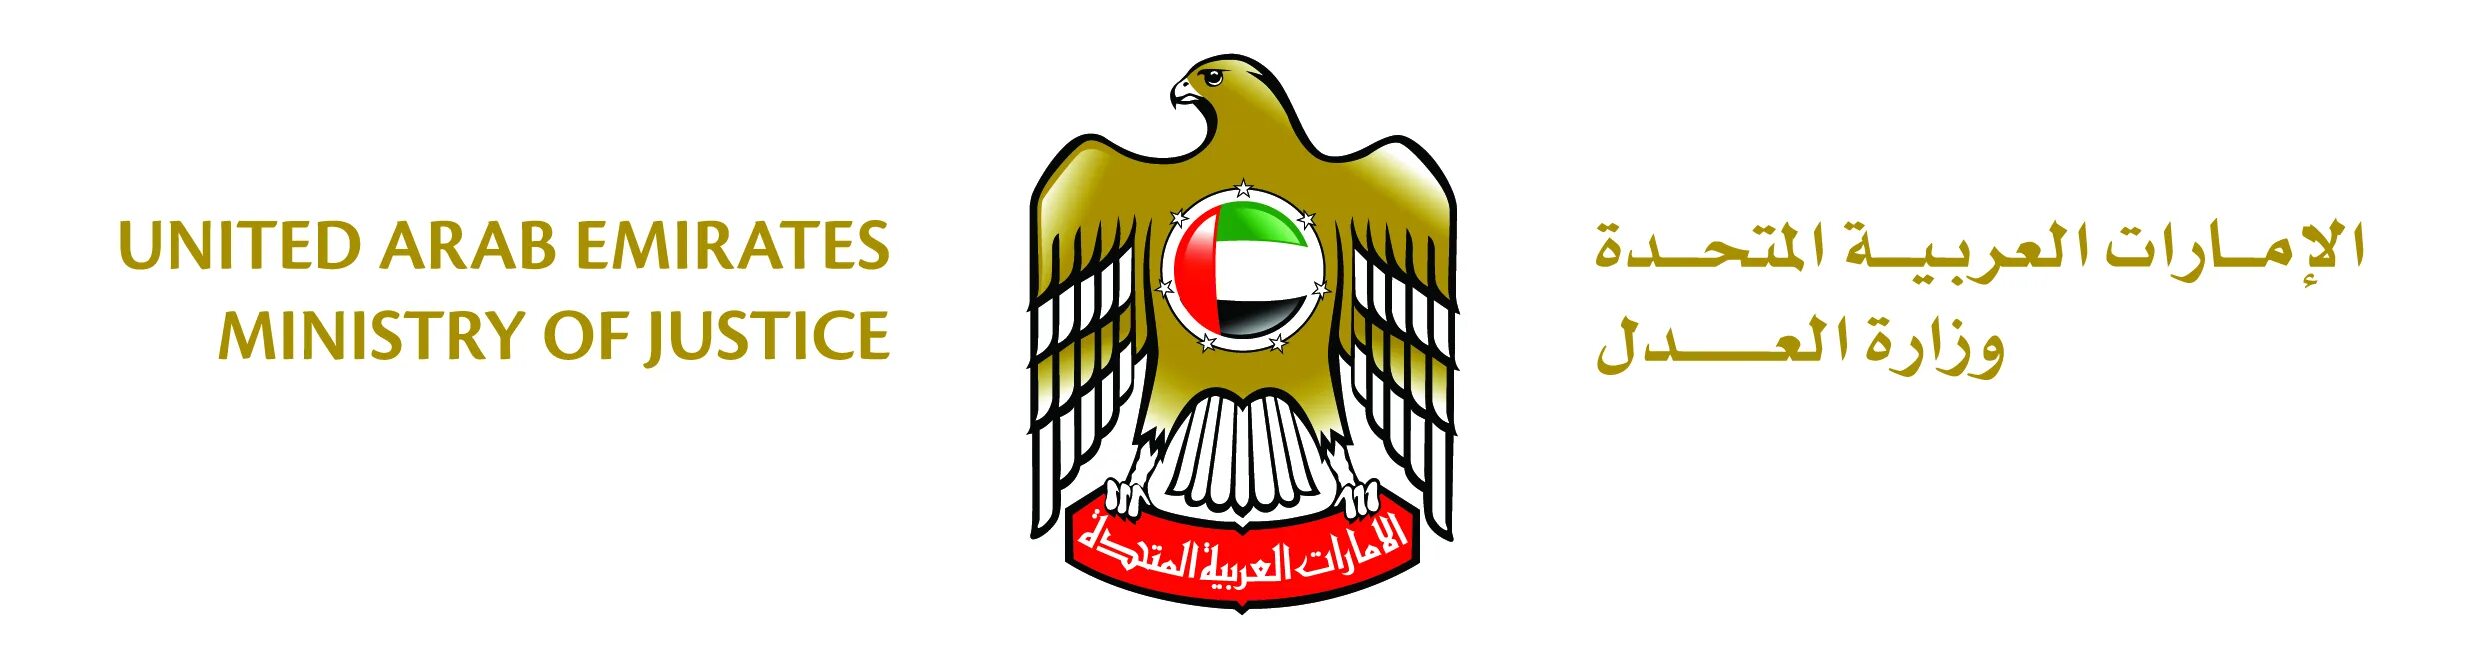 Ministry of justice. UAE - Ministry of Justice. Логотипы государственных органов ОАЭ. Министерство образования Республики Коми логотип. UAE Vision 2021 logo.